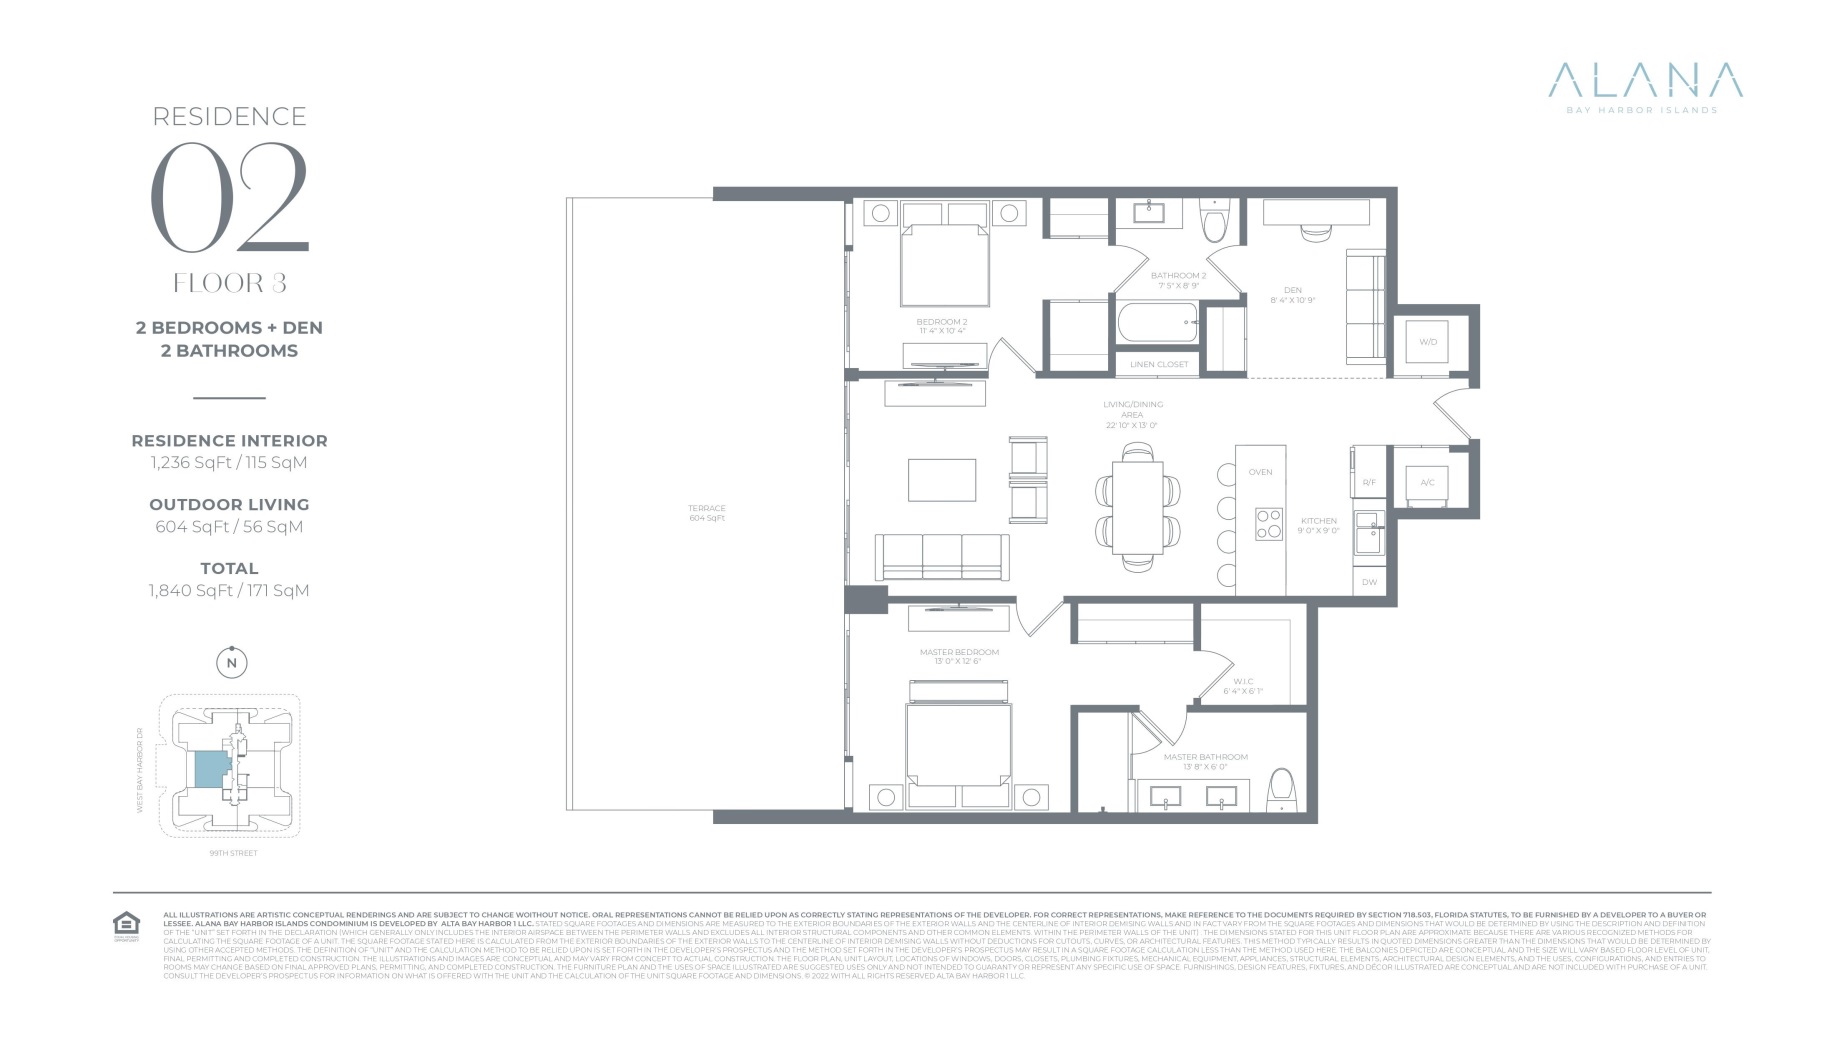 Alana_Floorplan_Residence02_floor3_3bed+den_2bath